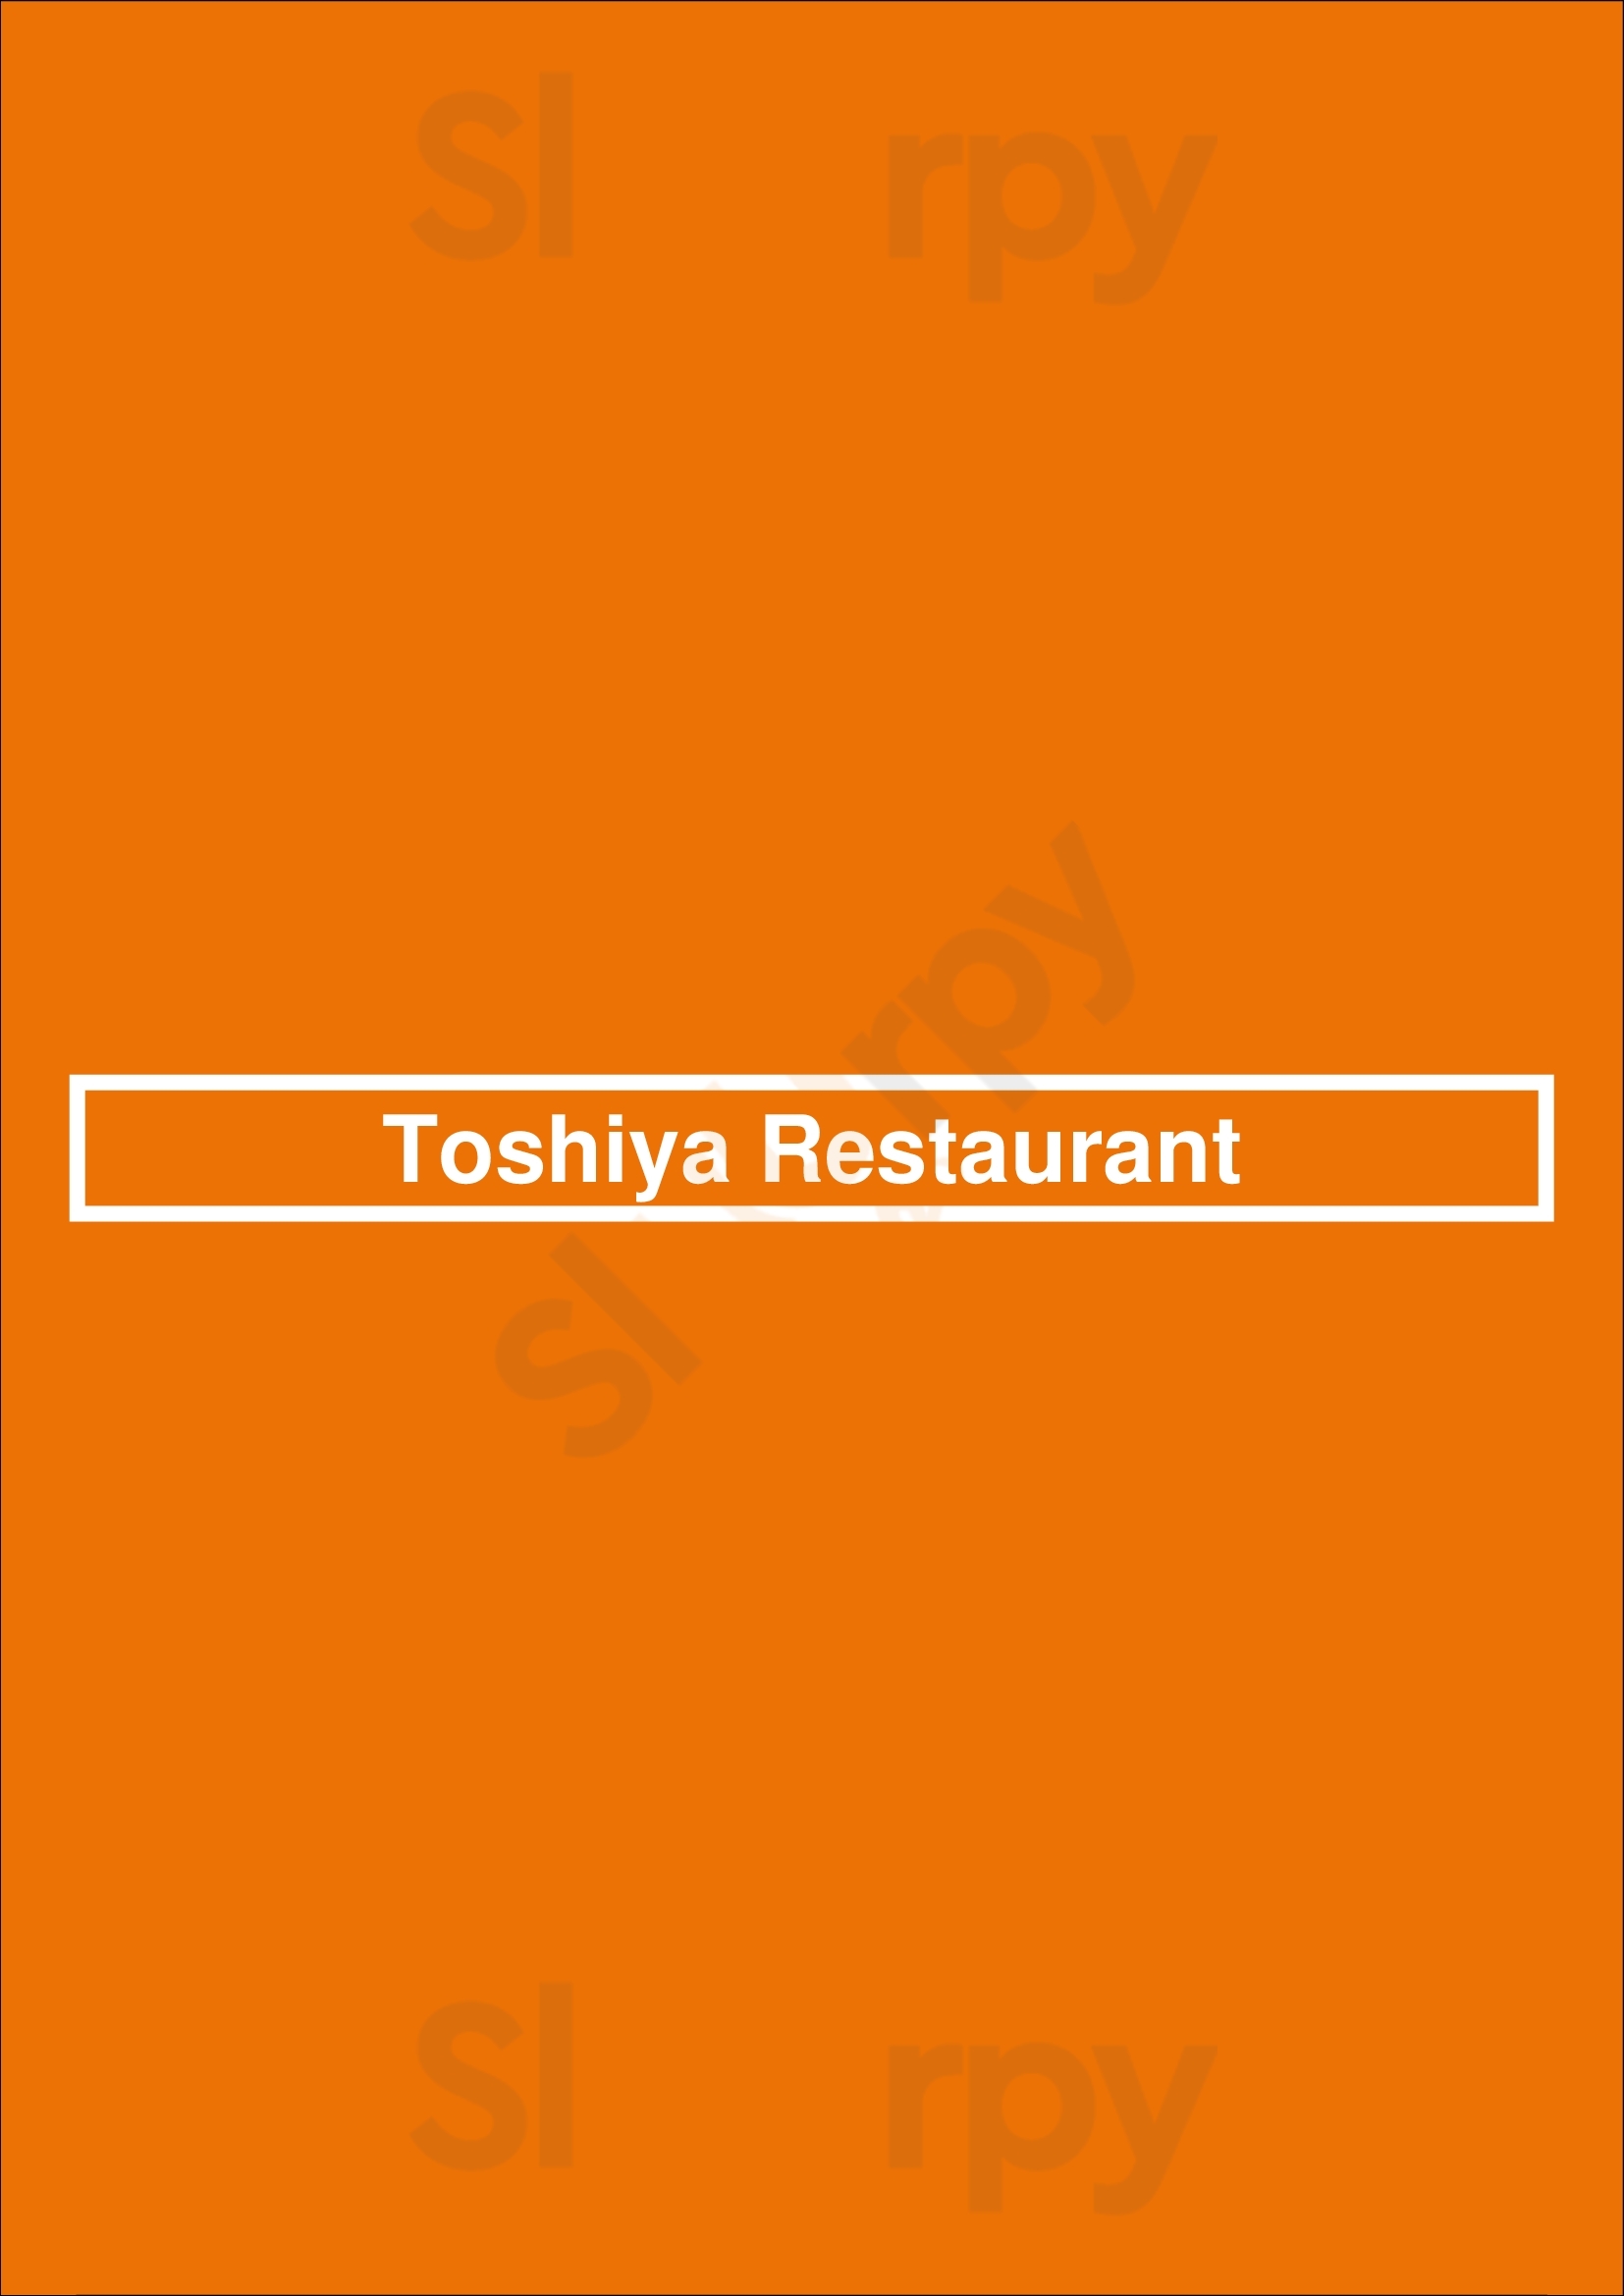 Toshiya Restaurant Cremorne Menu - 1